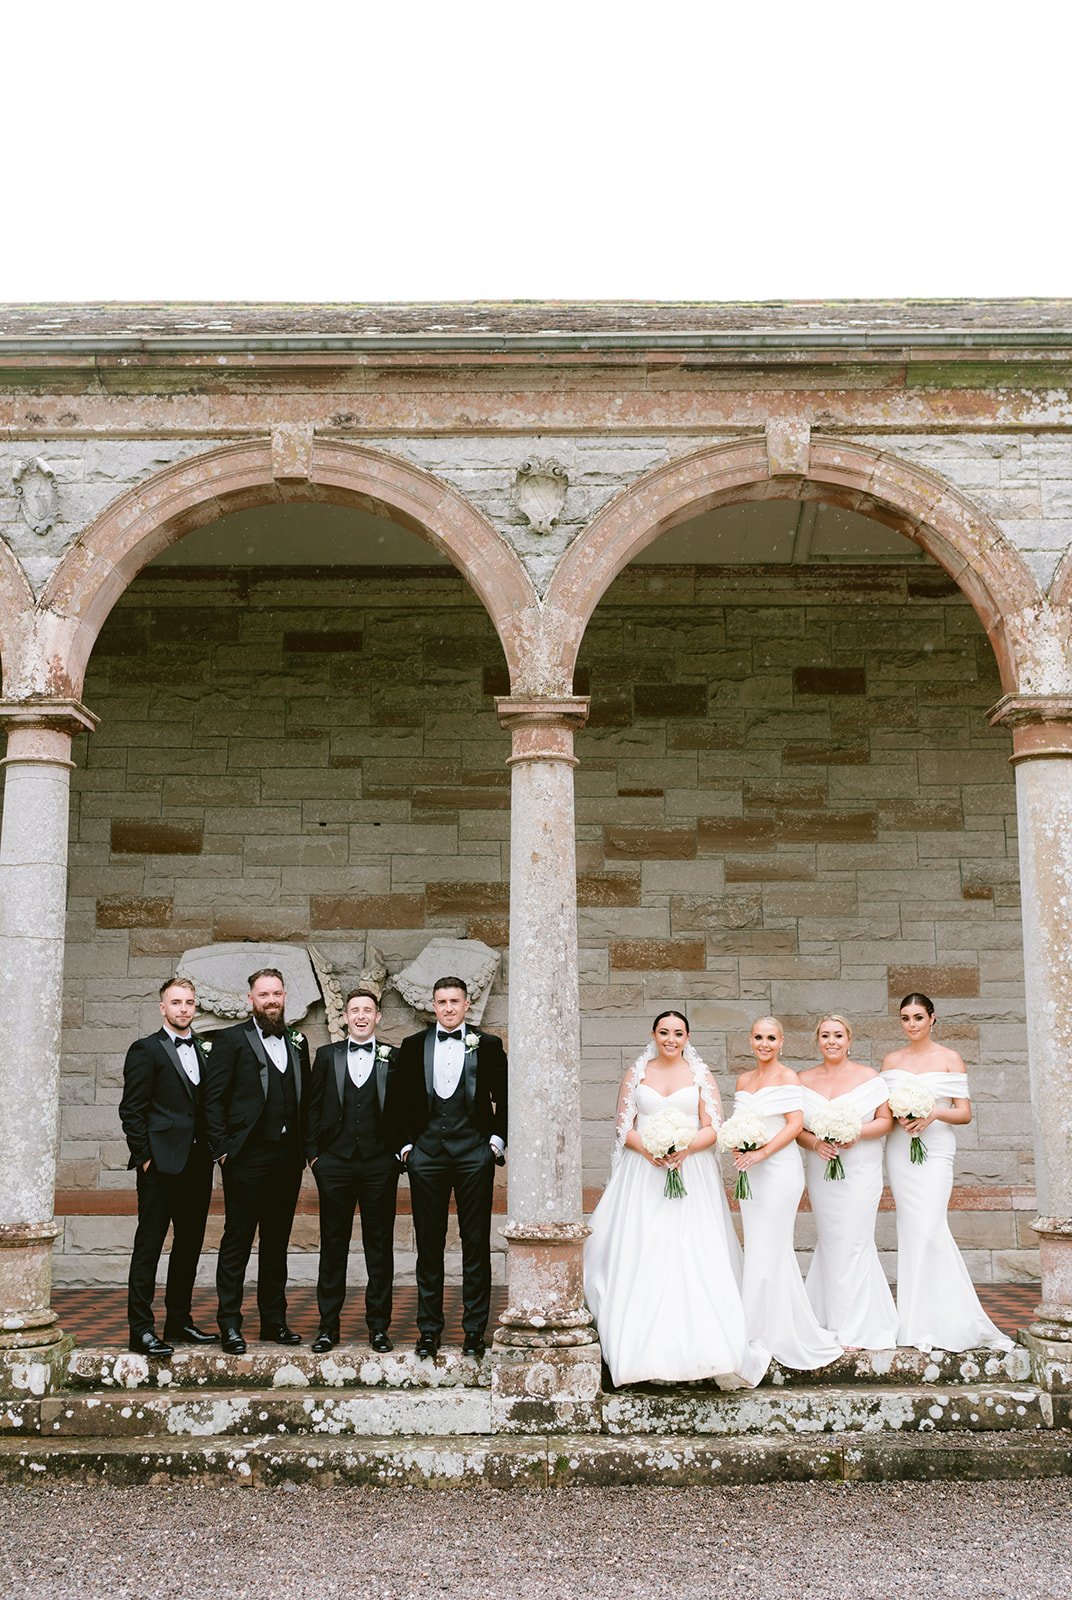 Castle Leslie Wedding photography, castle wedding Ireland, best irish wedding venues, Castle Leslie wedding photographer, black tie wedding ireland, top wedding venues Ireland (164).jpg